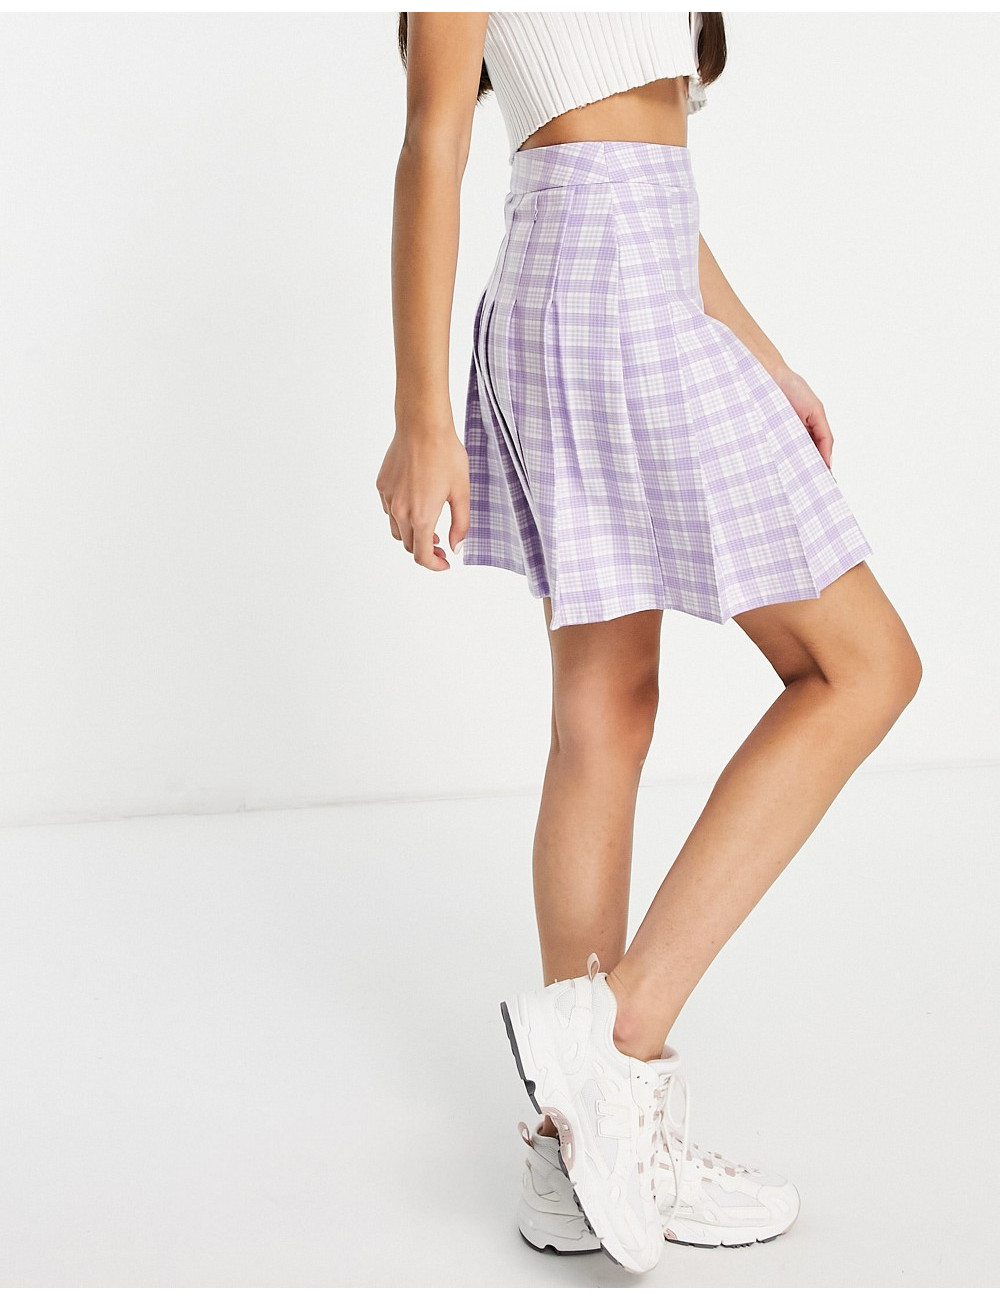 New Look tennis skirt in...